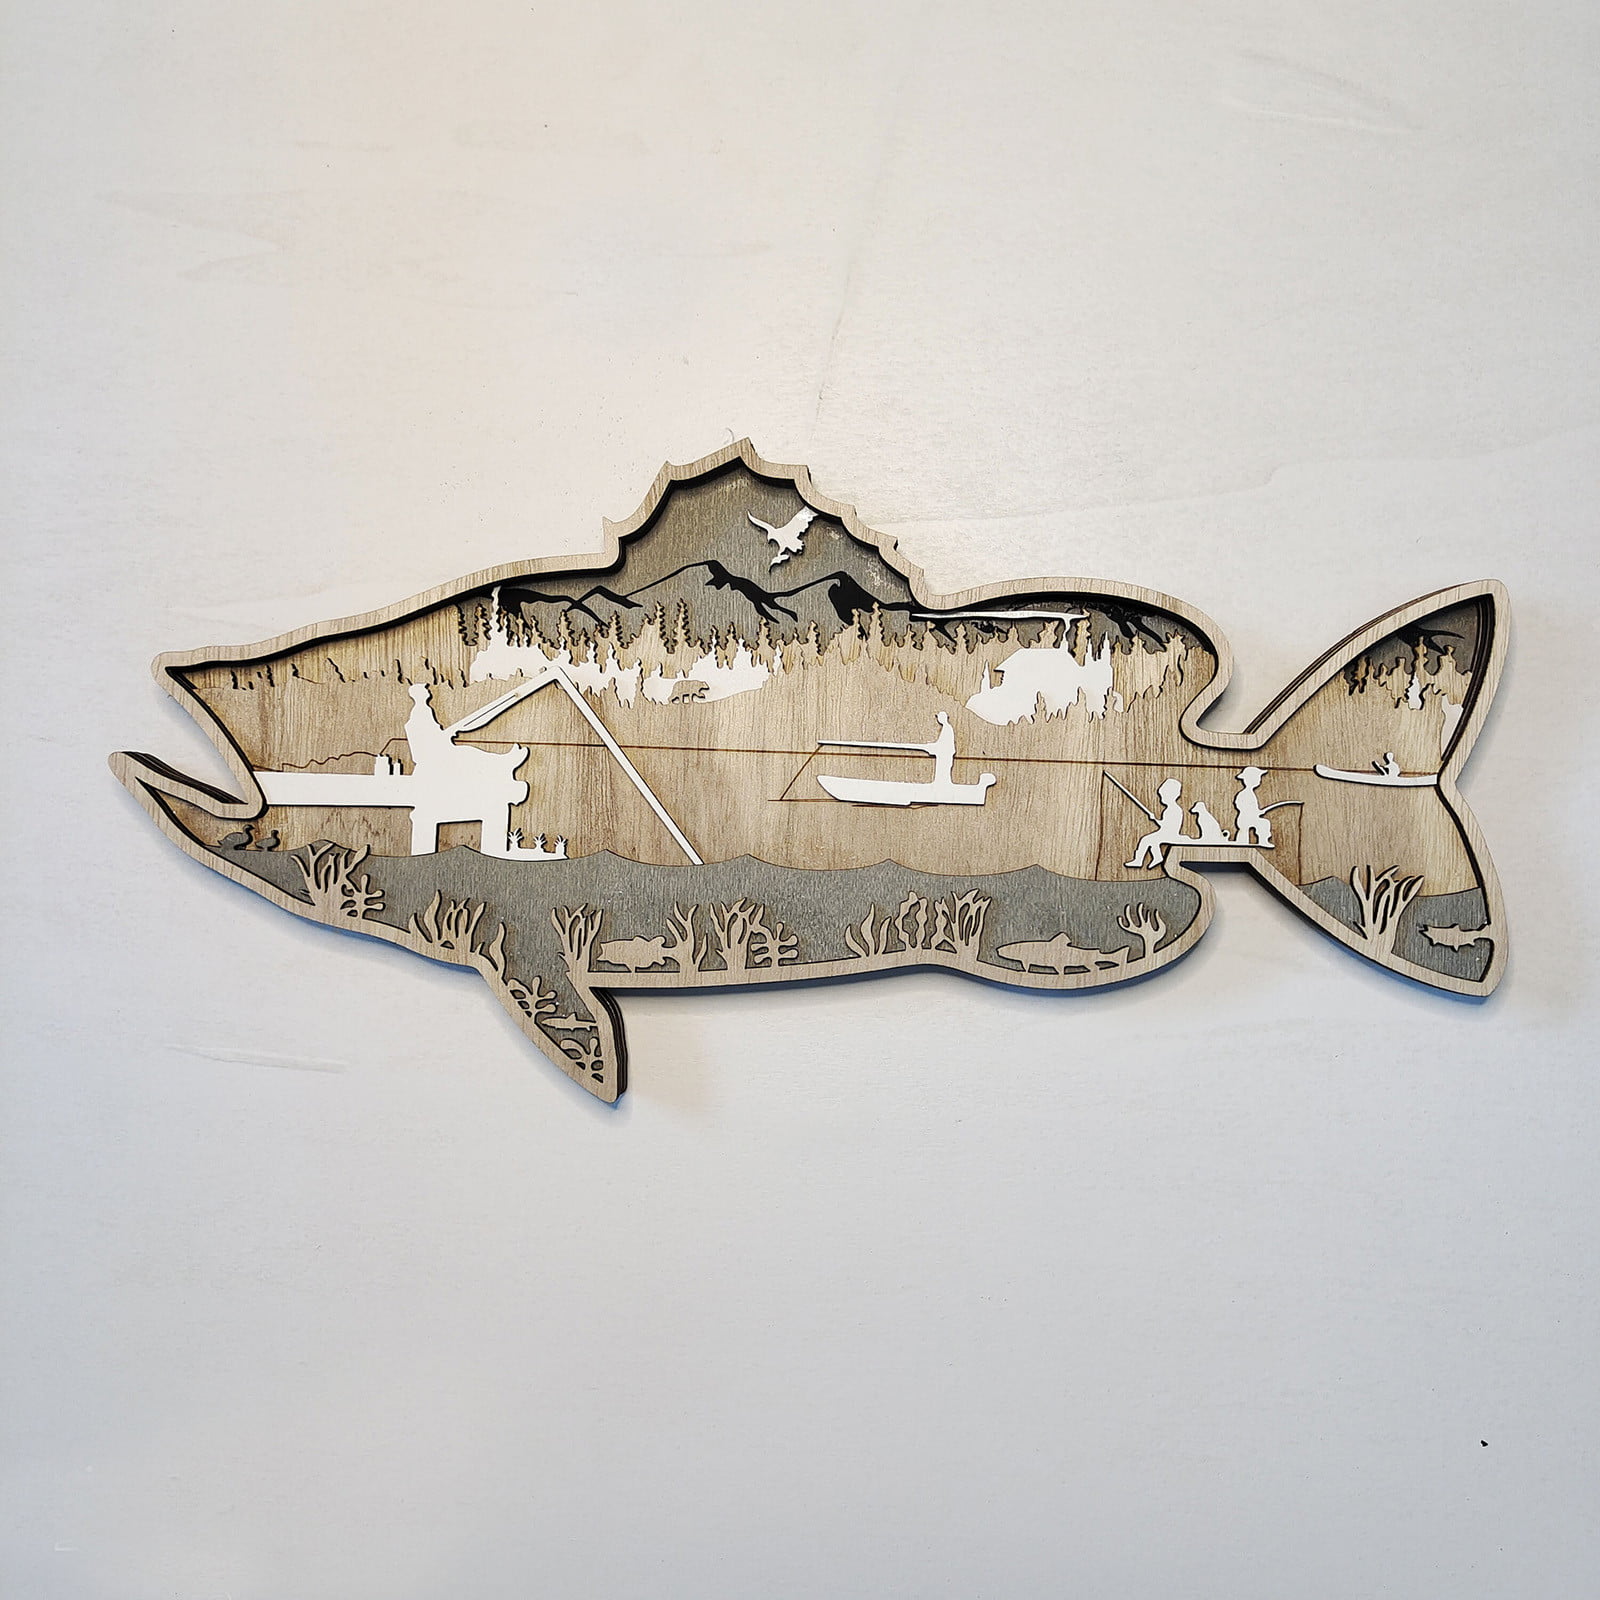 Tiitstoy 6 Layer Largemouth Bass Fish Crappie Fish Wooden Decoration Wall  Art Decor